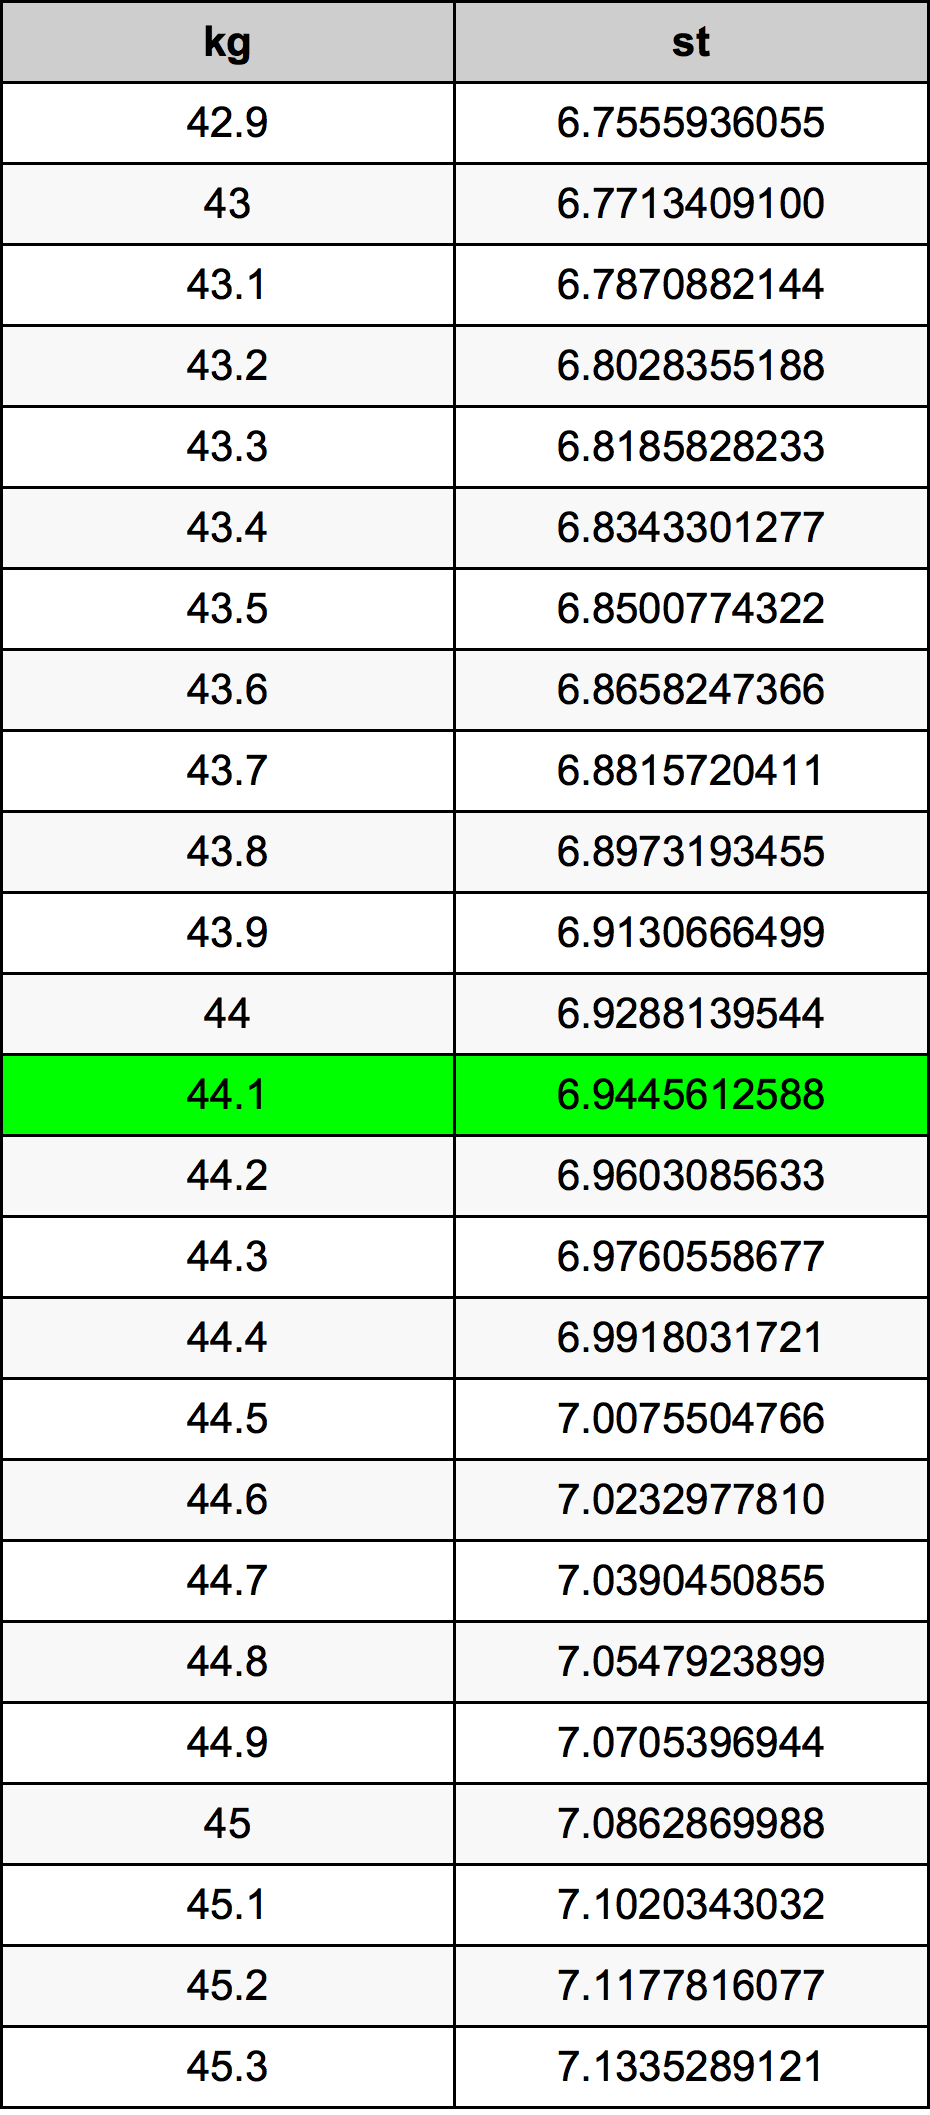 44.1 Kilogramma konverżjoni tabella